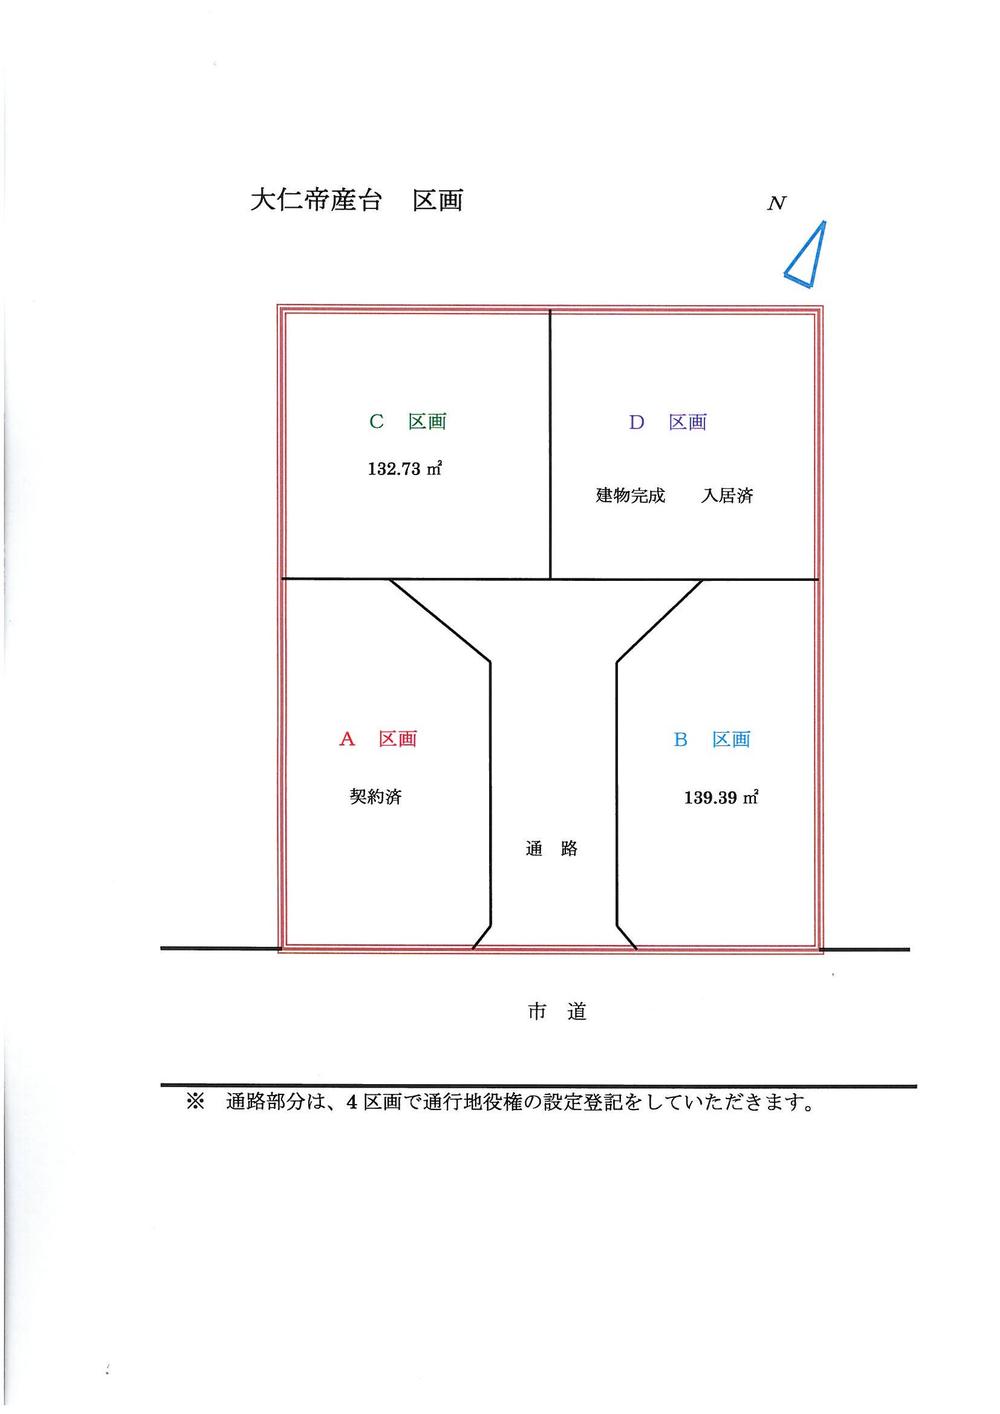 Compartment figure. Land price 10 million yen, Land area 163.61 sq m